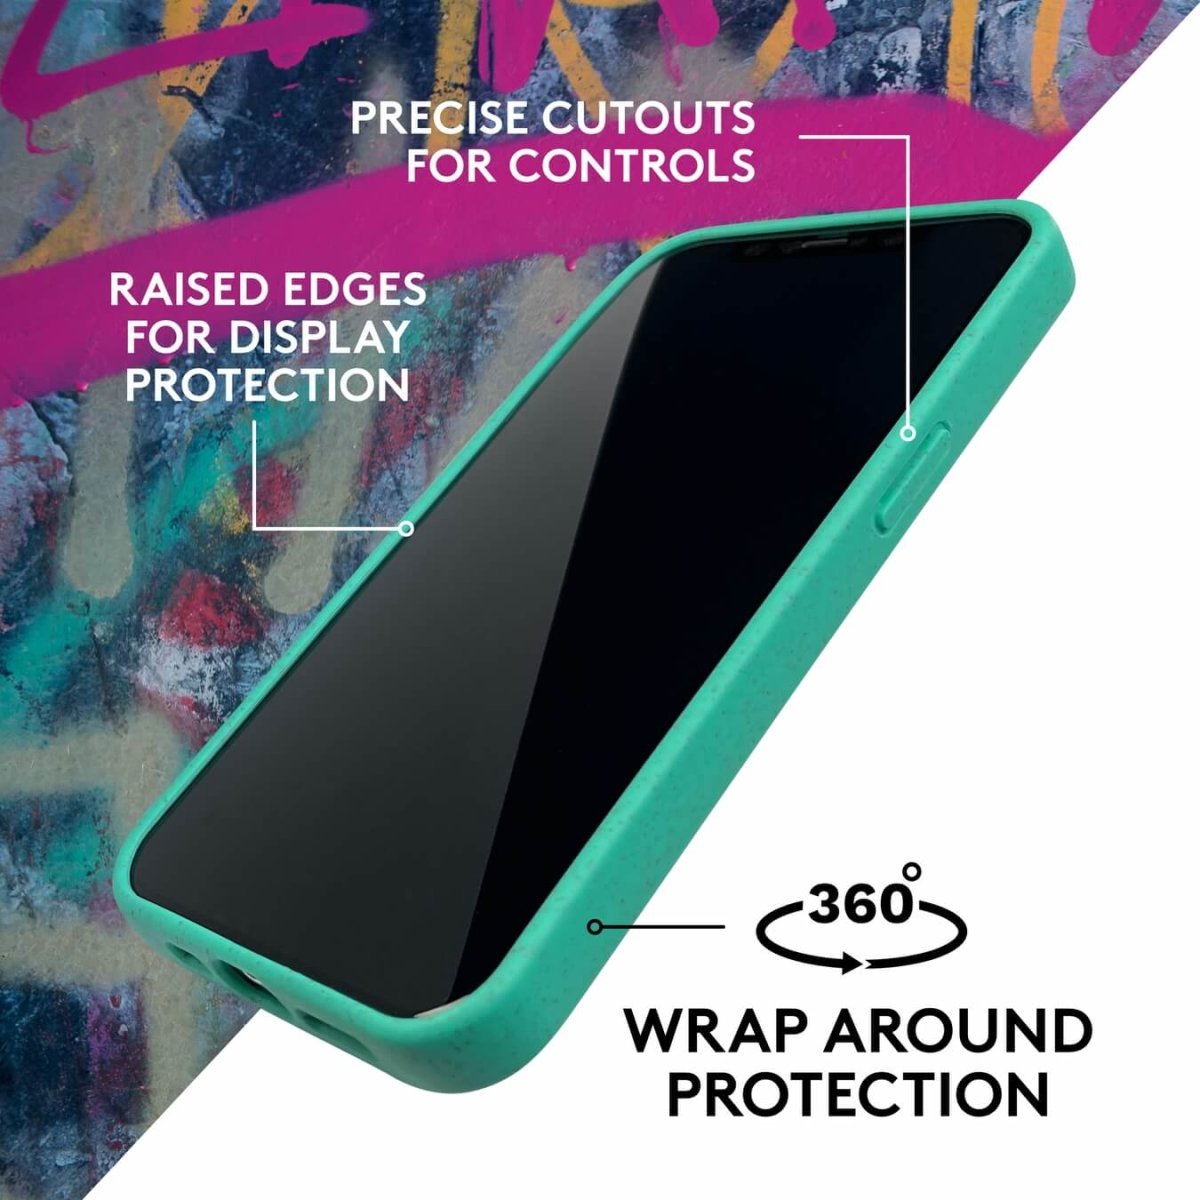 Biodegradable iPhone 14 Pro Max Case - Mint - Loam & Lore